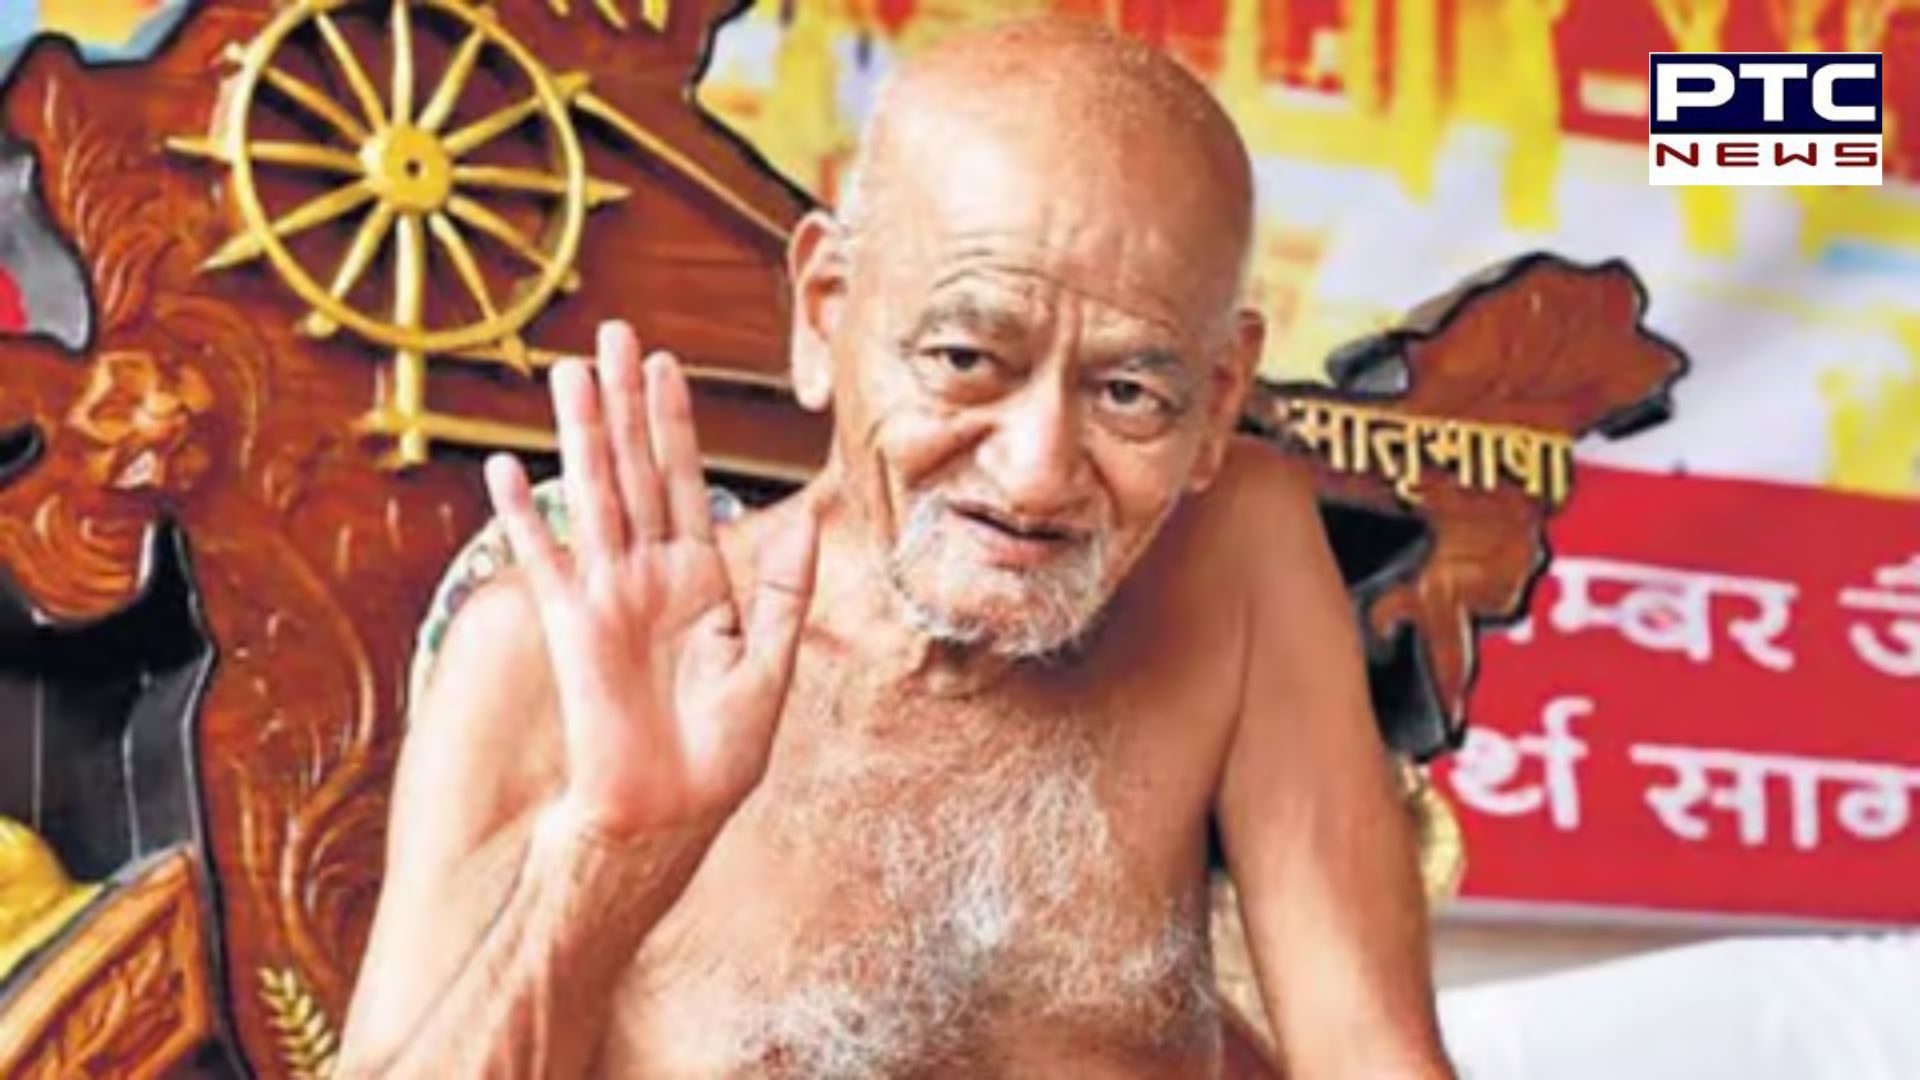 Jain seer Acharya Vidyasagar Maharaj, 77, passes away; PM Modi responds